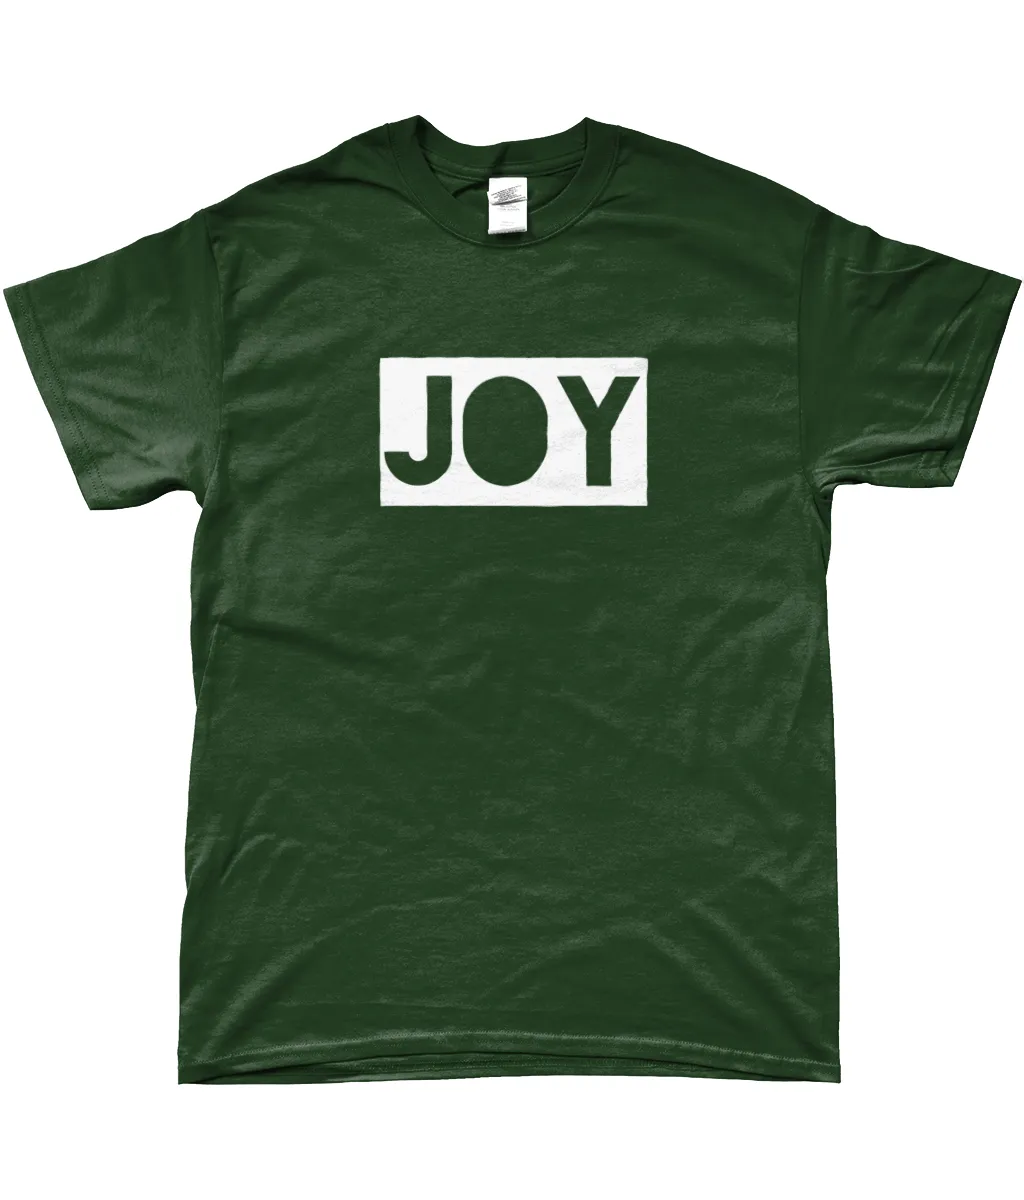 The 'JOY' T-shirt